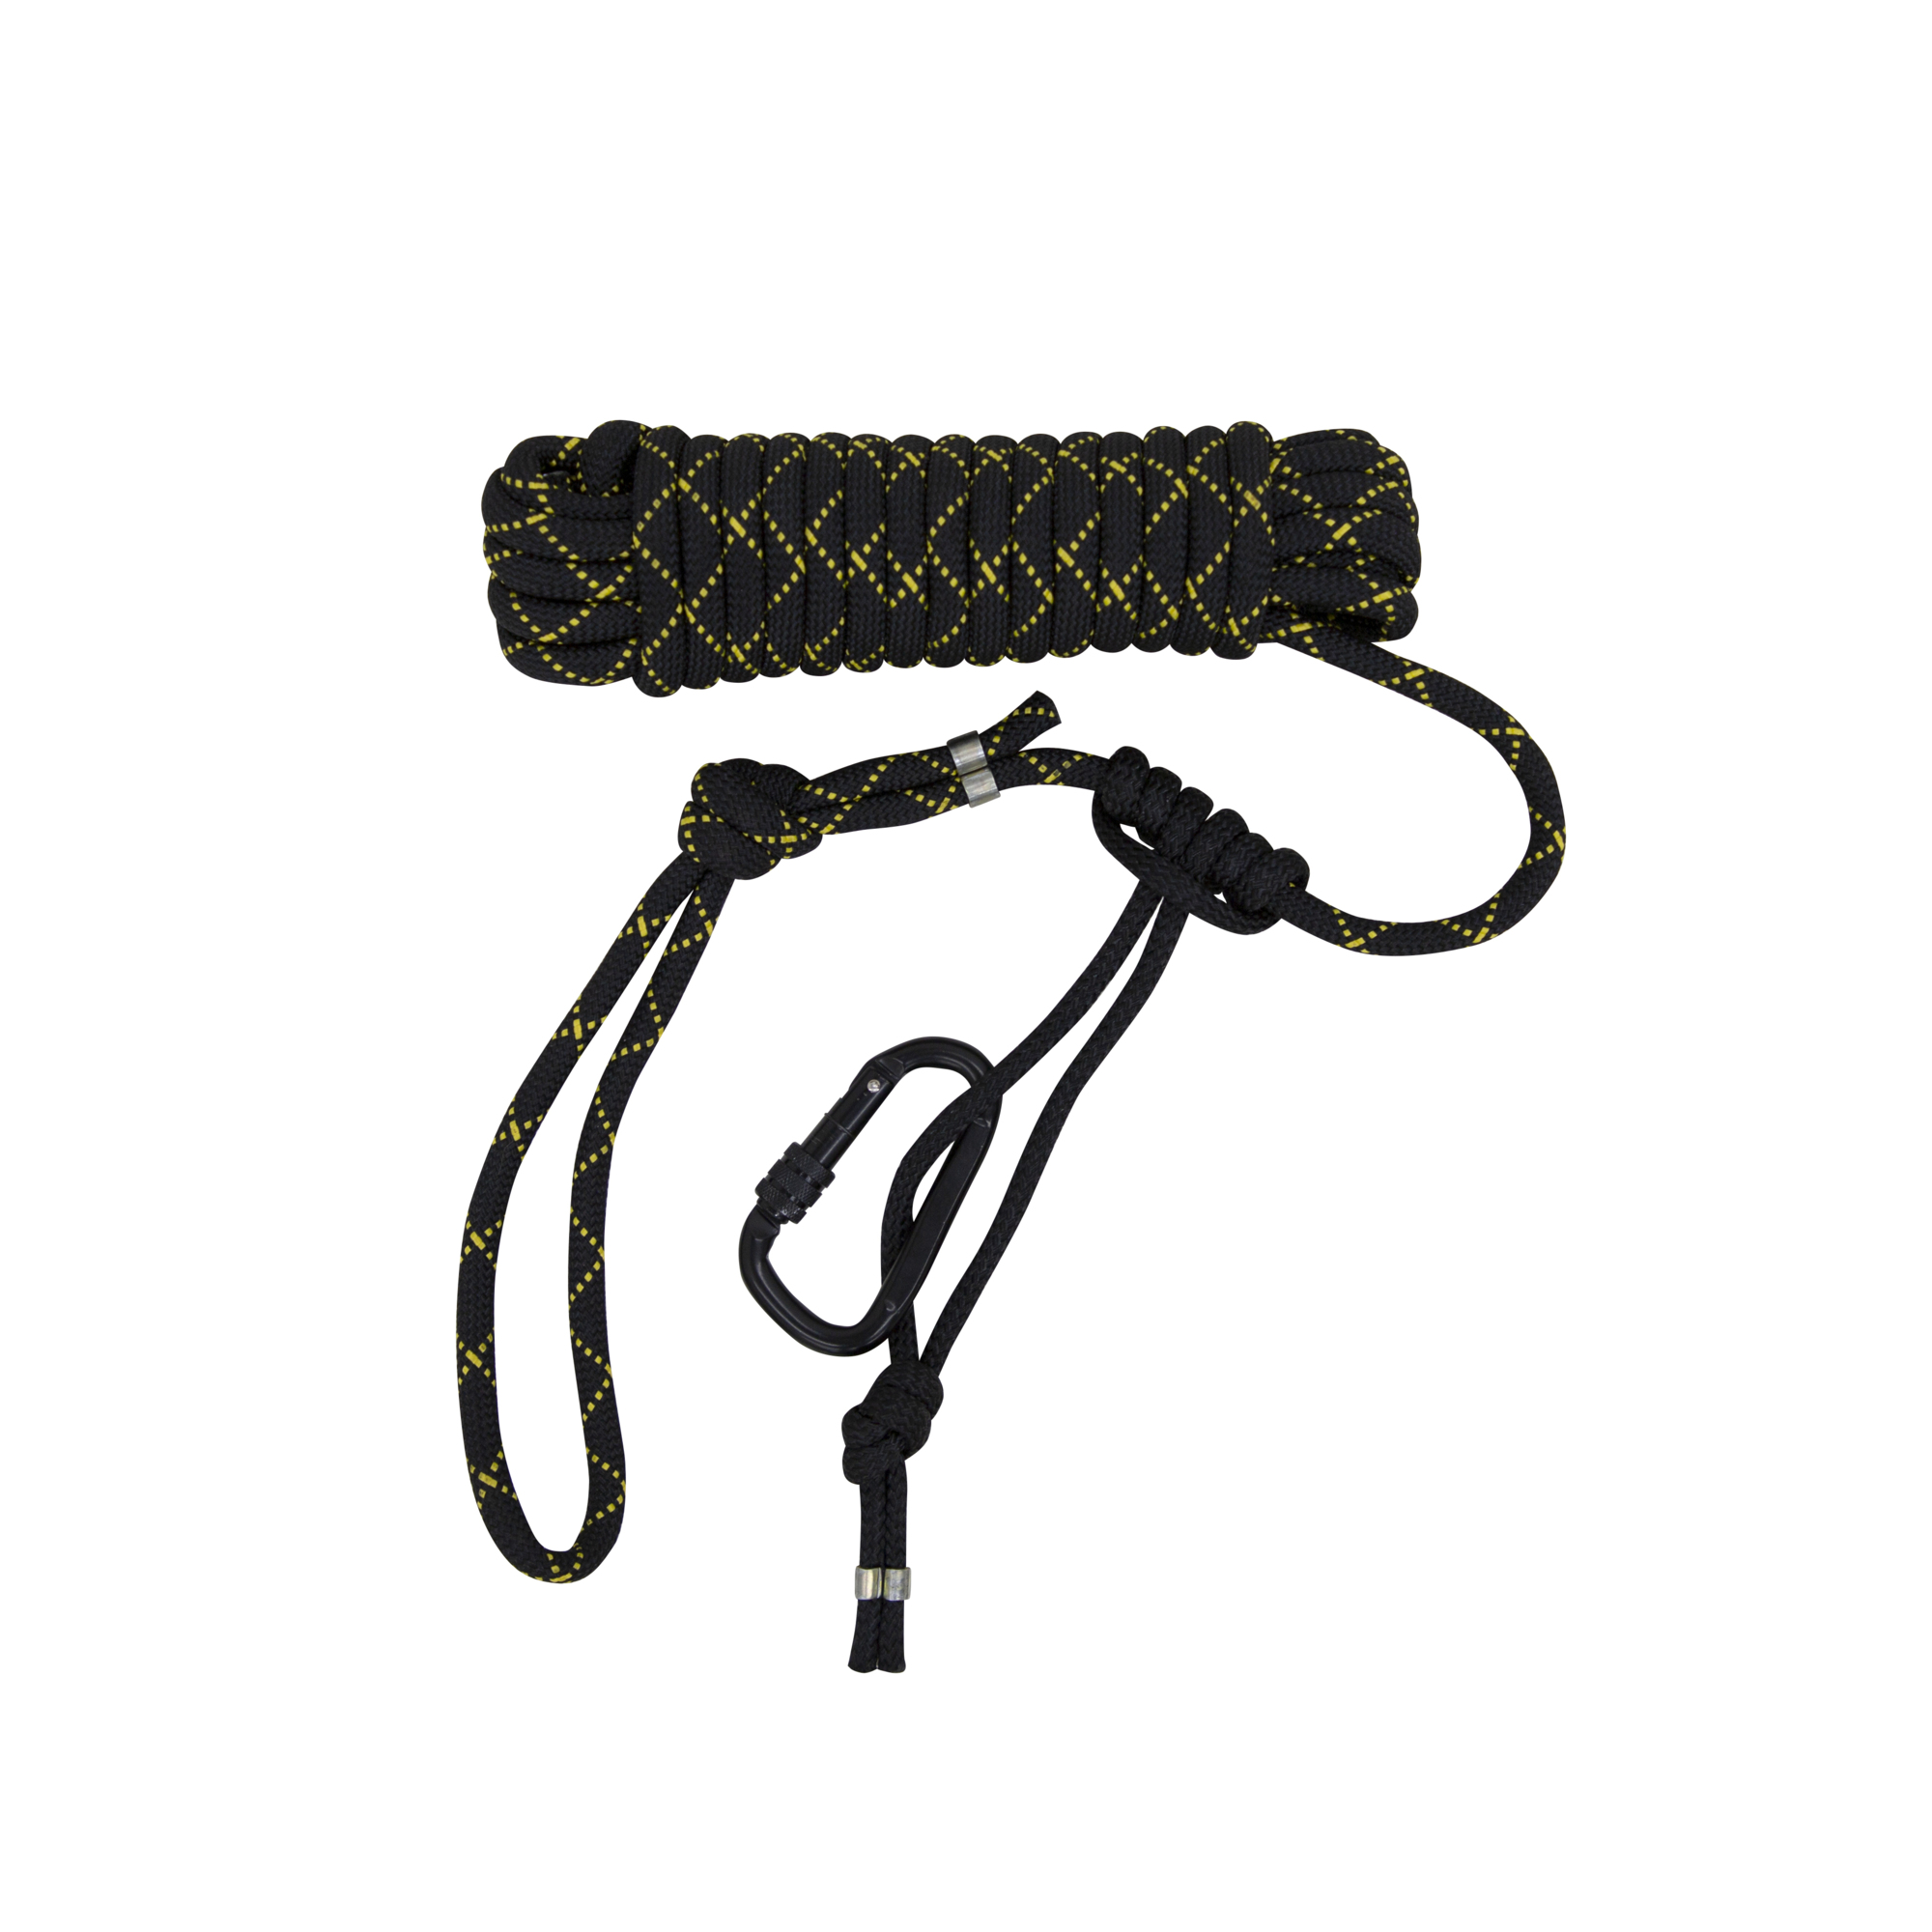 Rivers Edge, 30â Safety Rope, Locking Carabiner, 300lb Capacity, Color Black, Model RE787